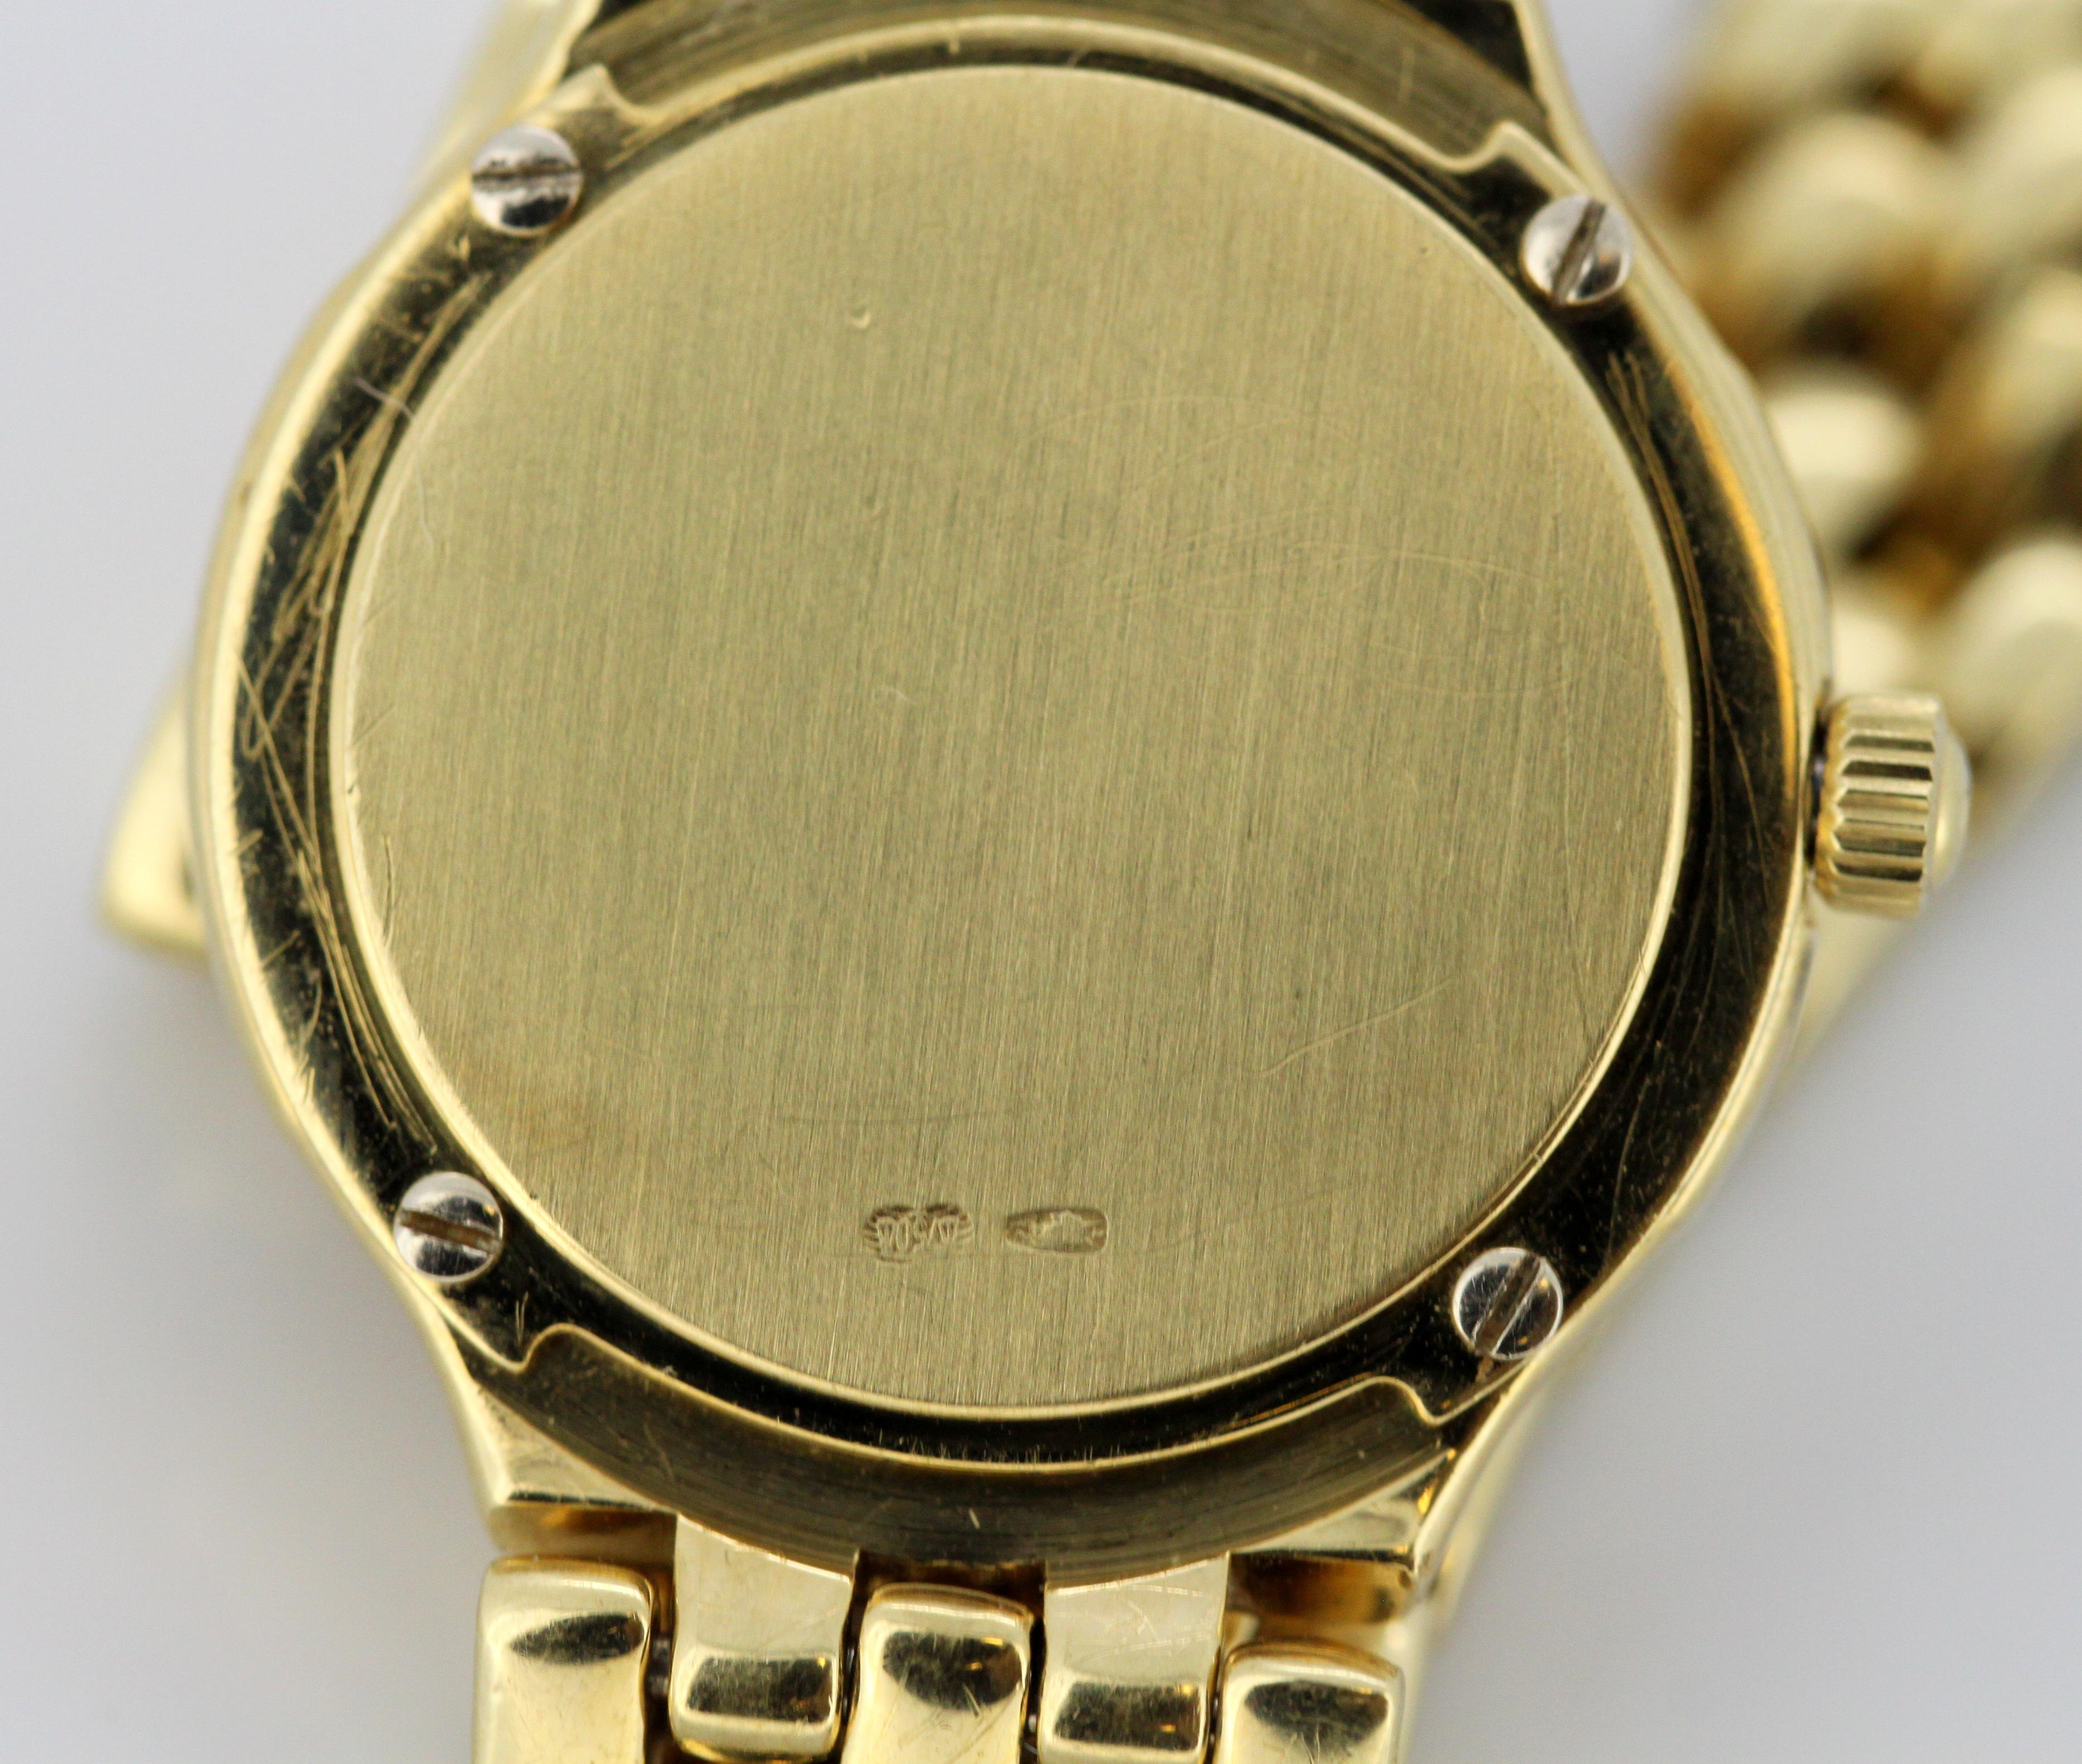 Ladies Omega wristwatch set in full 18k gold, diamond bezel & hour markers 10